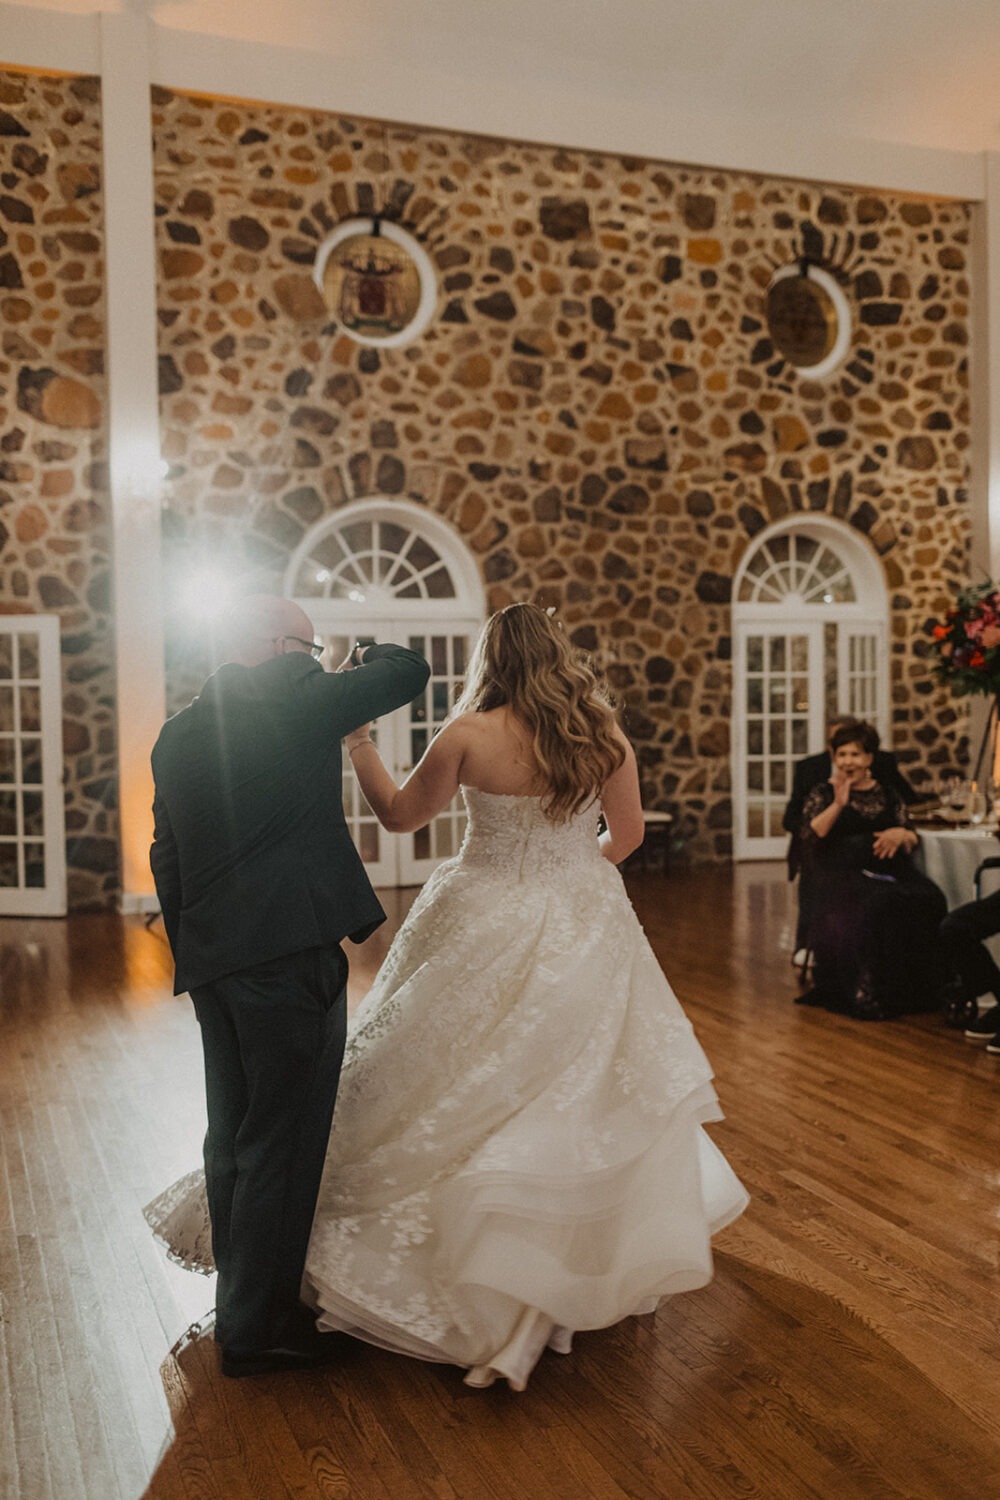 couple dances at wedding reception using wedding planning tips